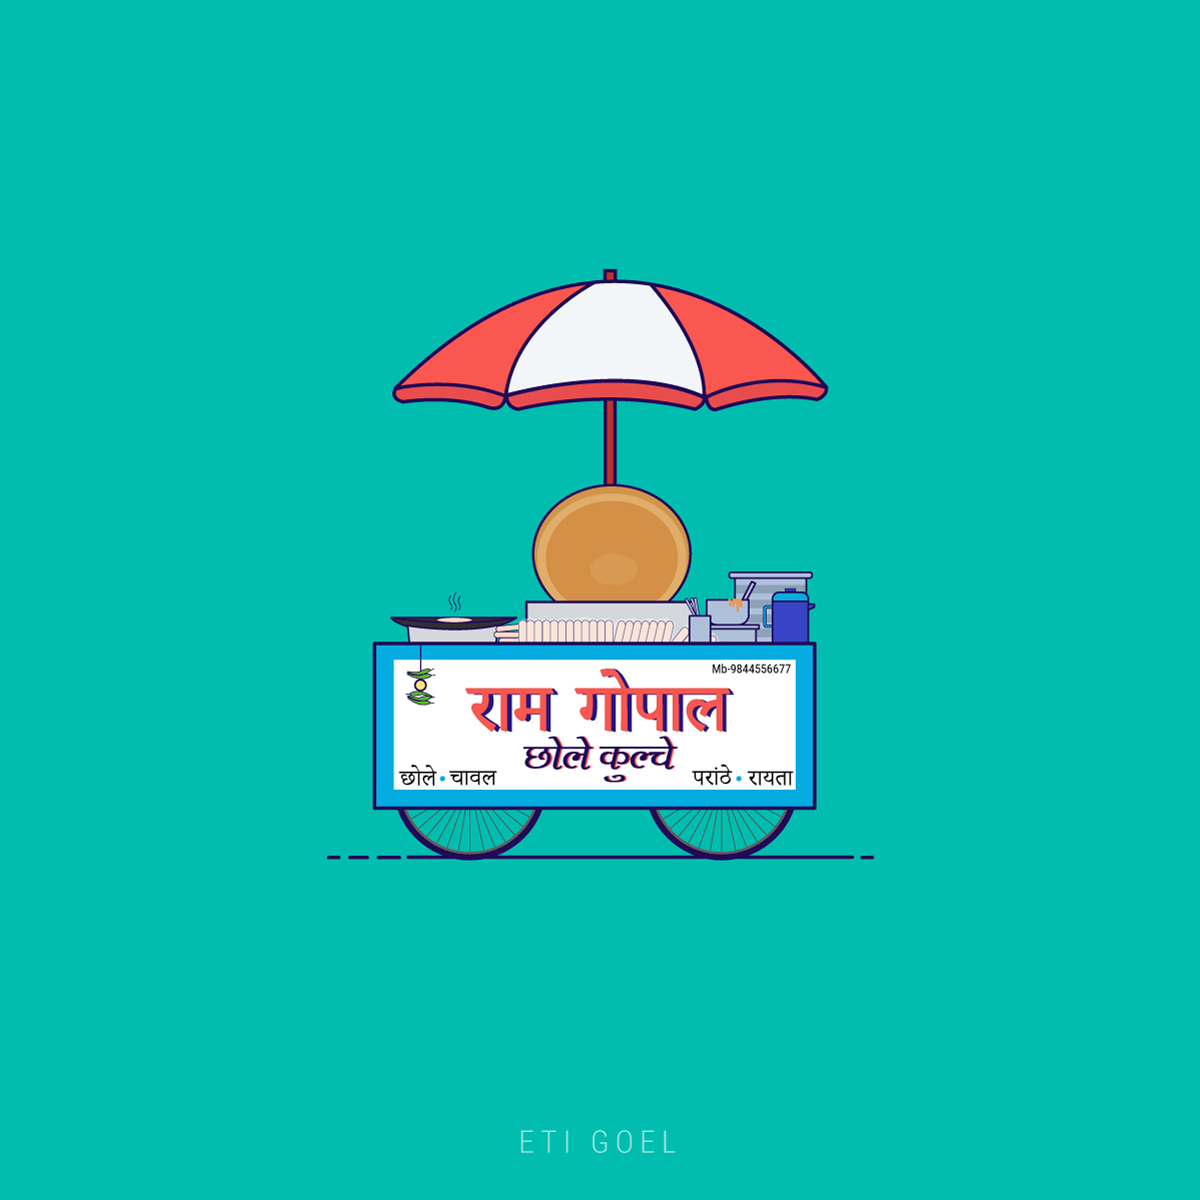 Food  minimal icons indian design Illustrative flat creative